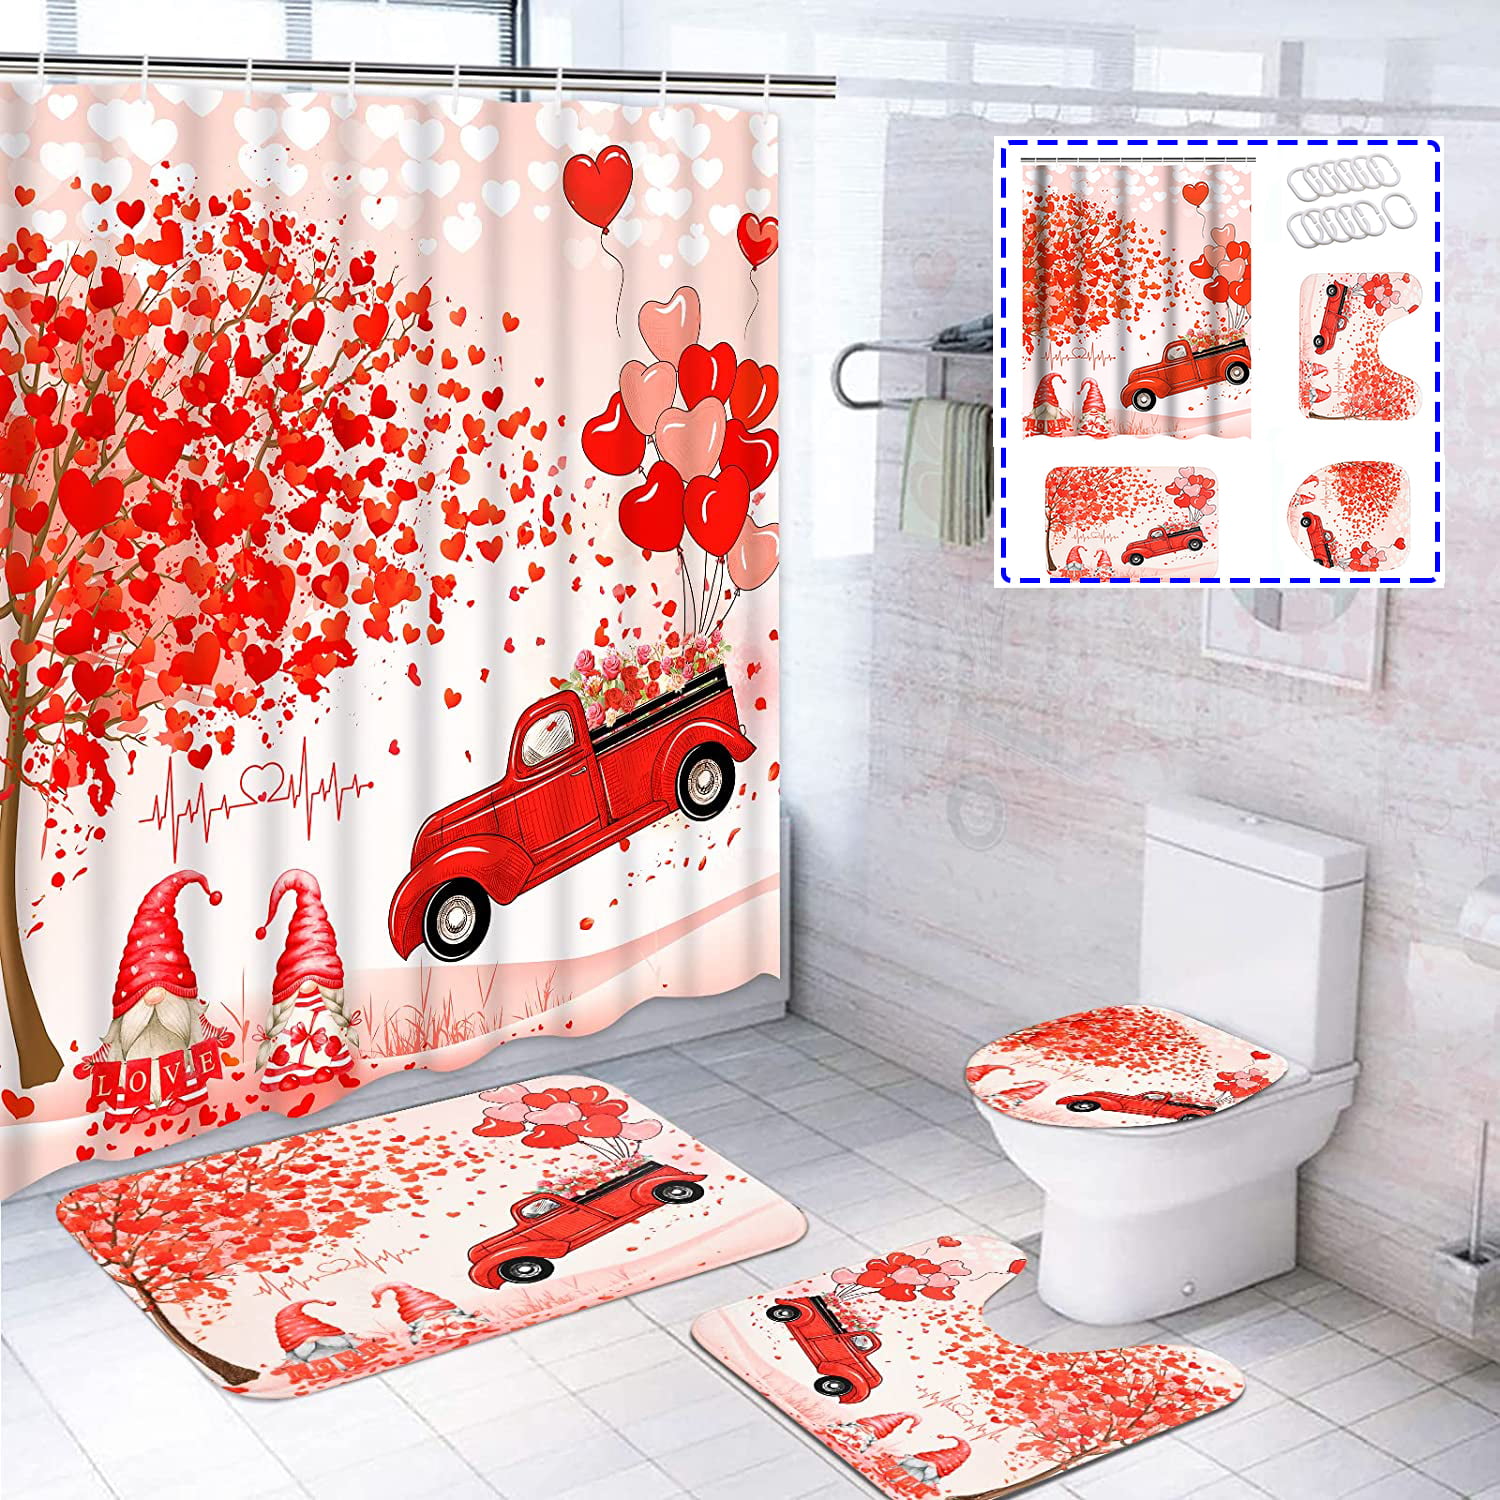 Details about   Moana Bathroom Rugs Shower Curtains 4PCS Non-Slip Foot Mat Toilet Lid Cover Mats 